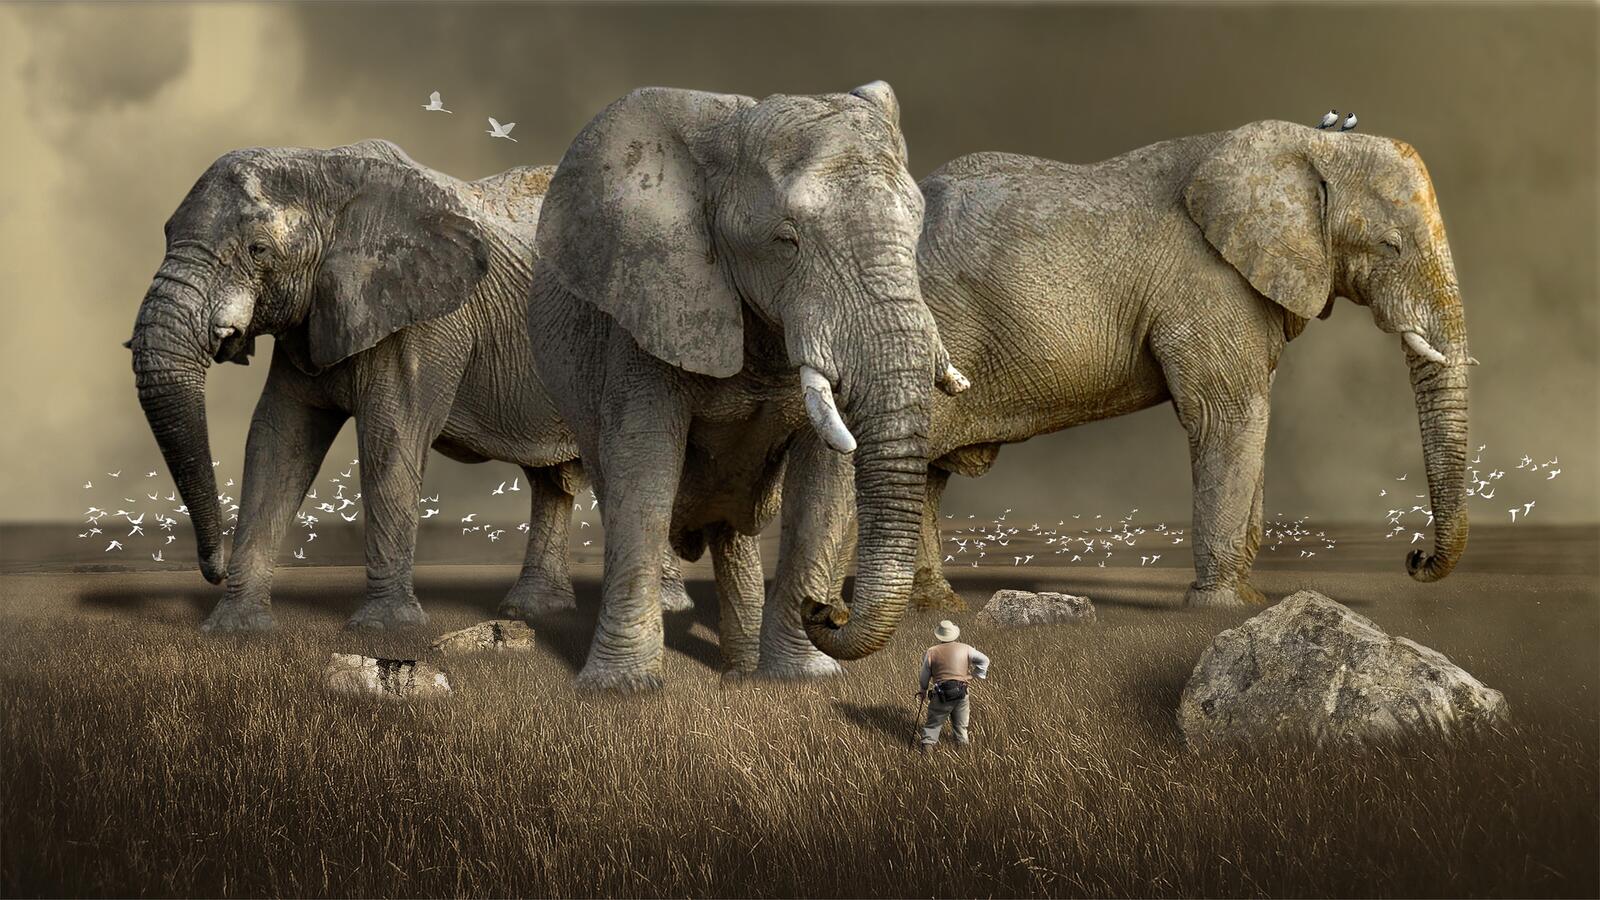 Wallpapers southern africa safari wildlife on the desktop